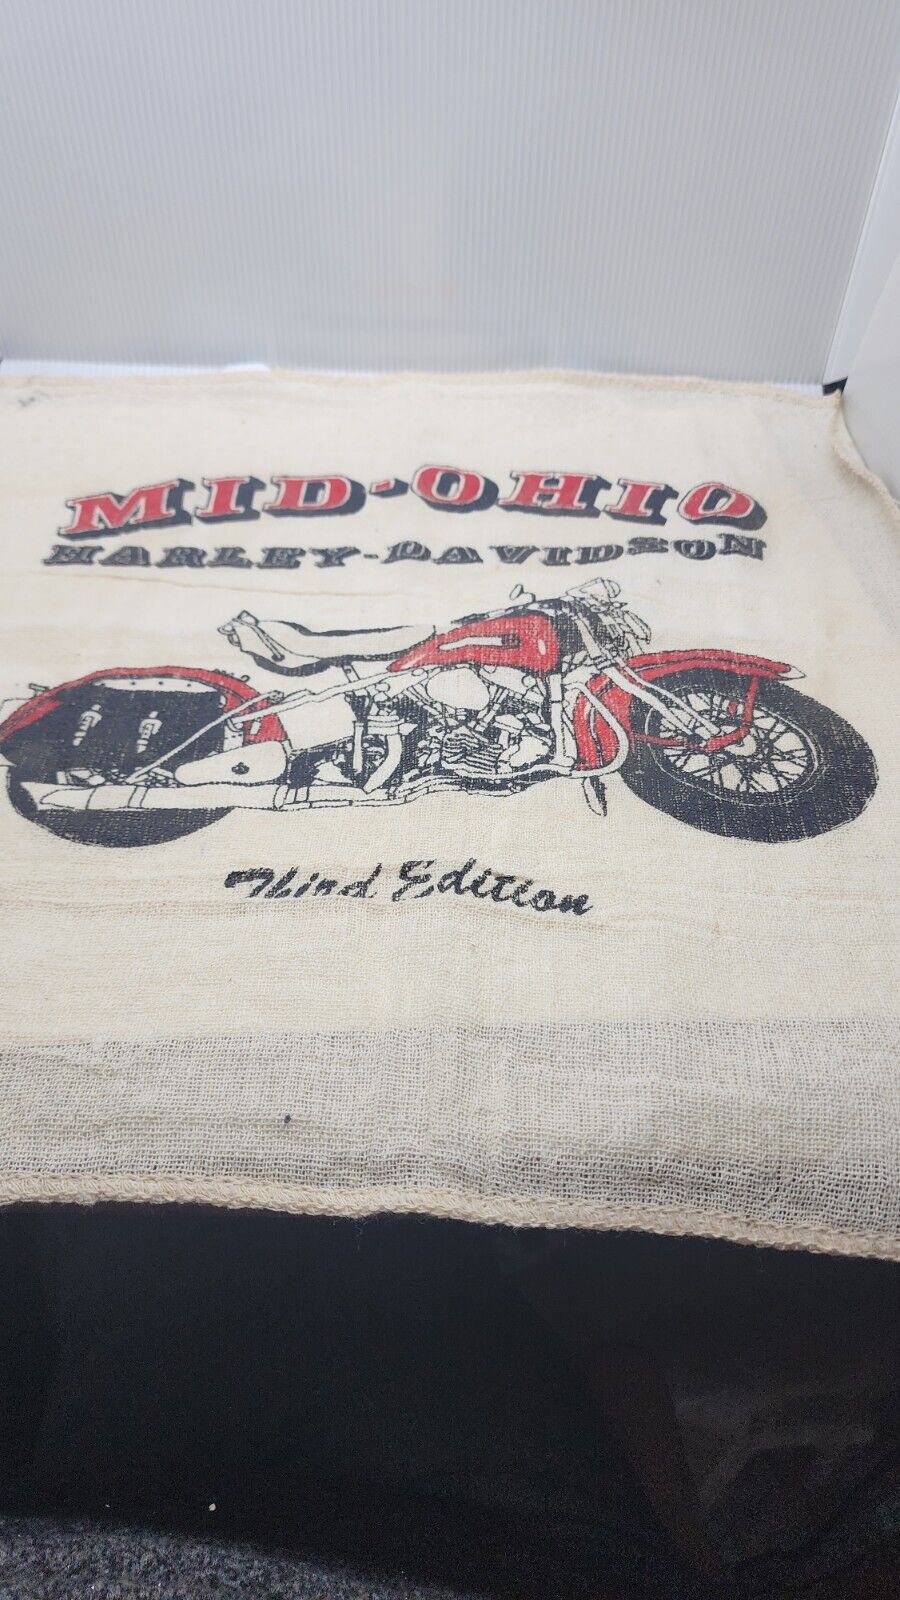 Harley Davidson Mid Ohio Hand Towel Image Red Motorcycle Third Edition RARE